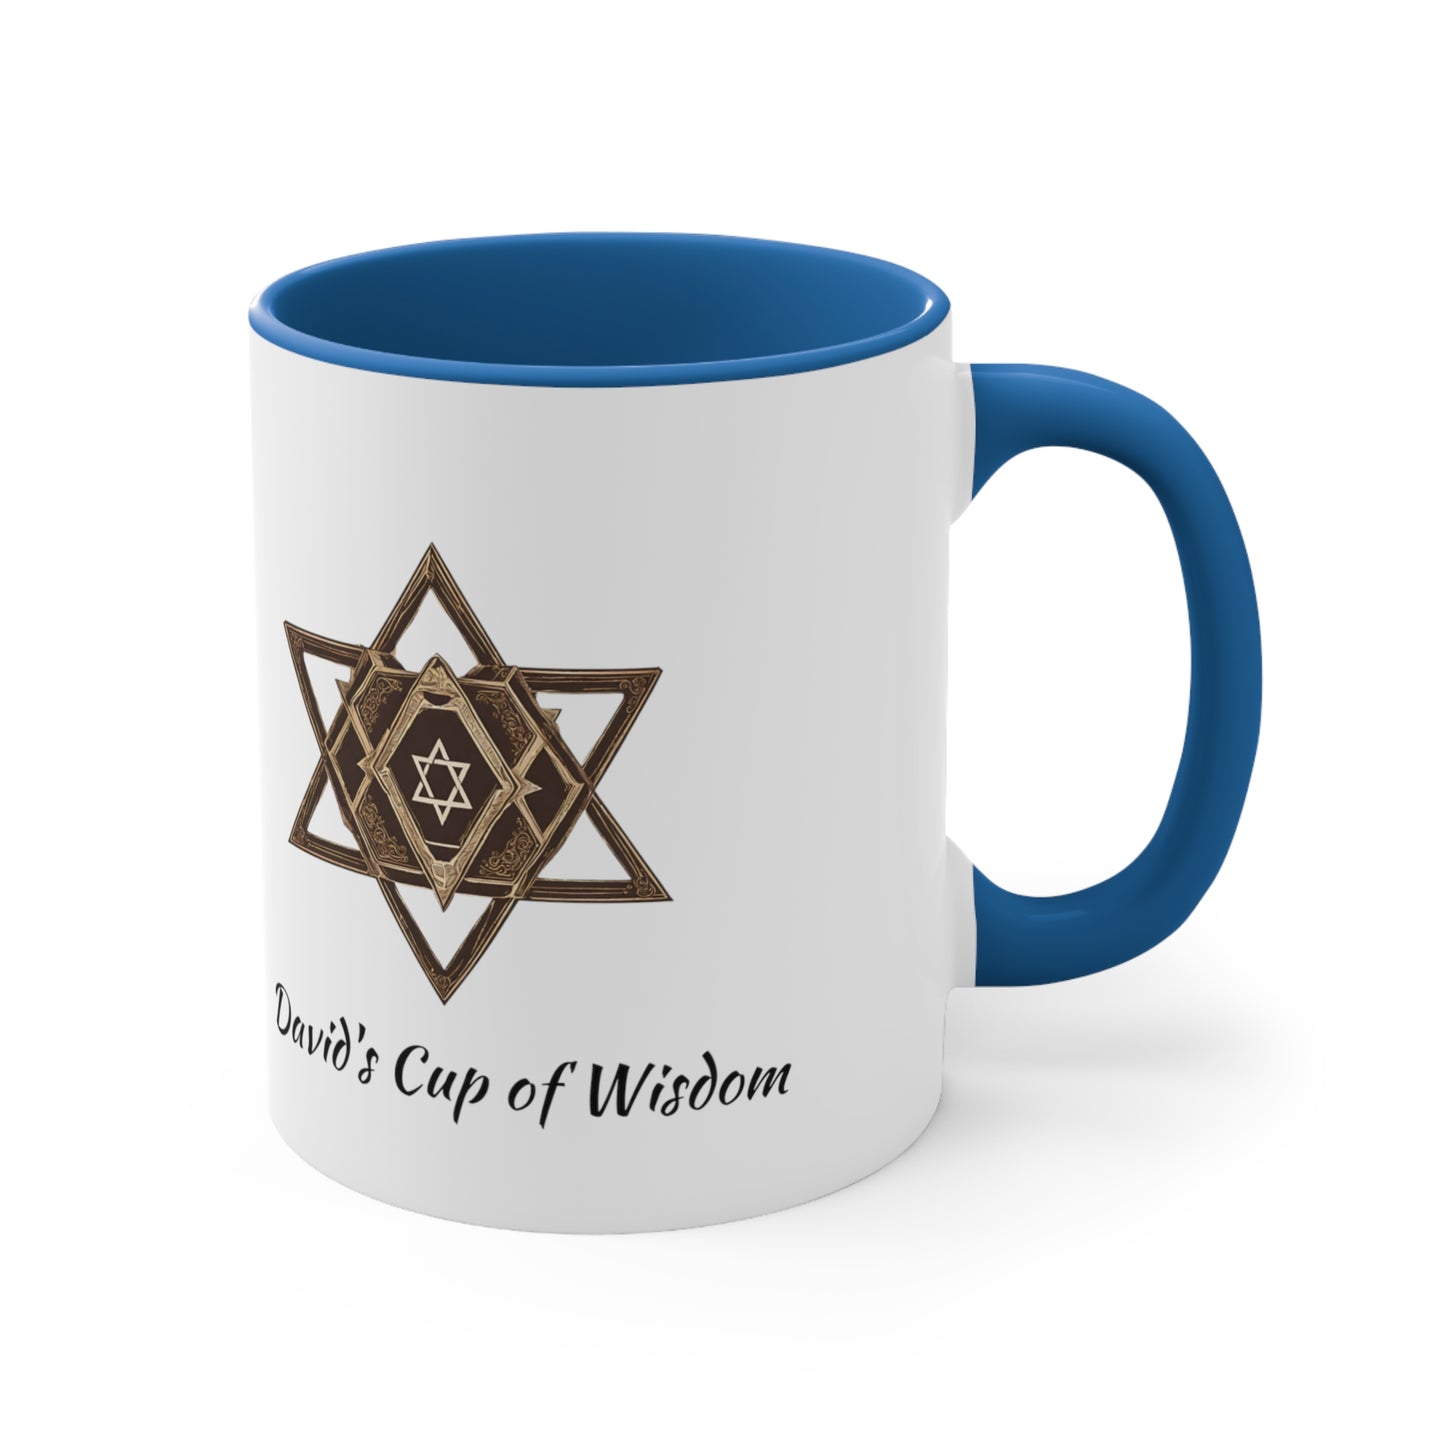 "David's cup of Wisdom" Coffee Mug, 11oz